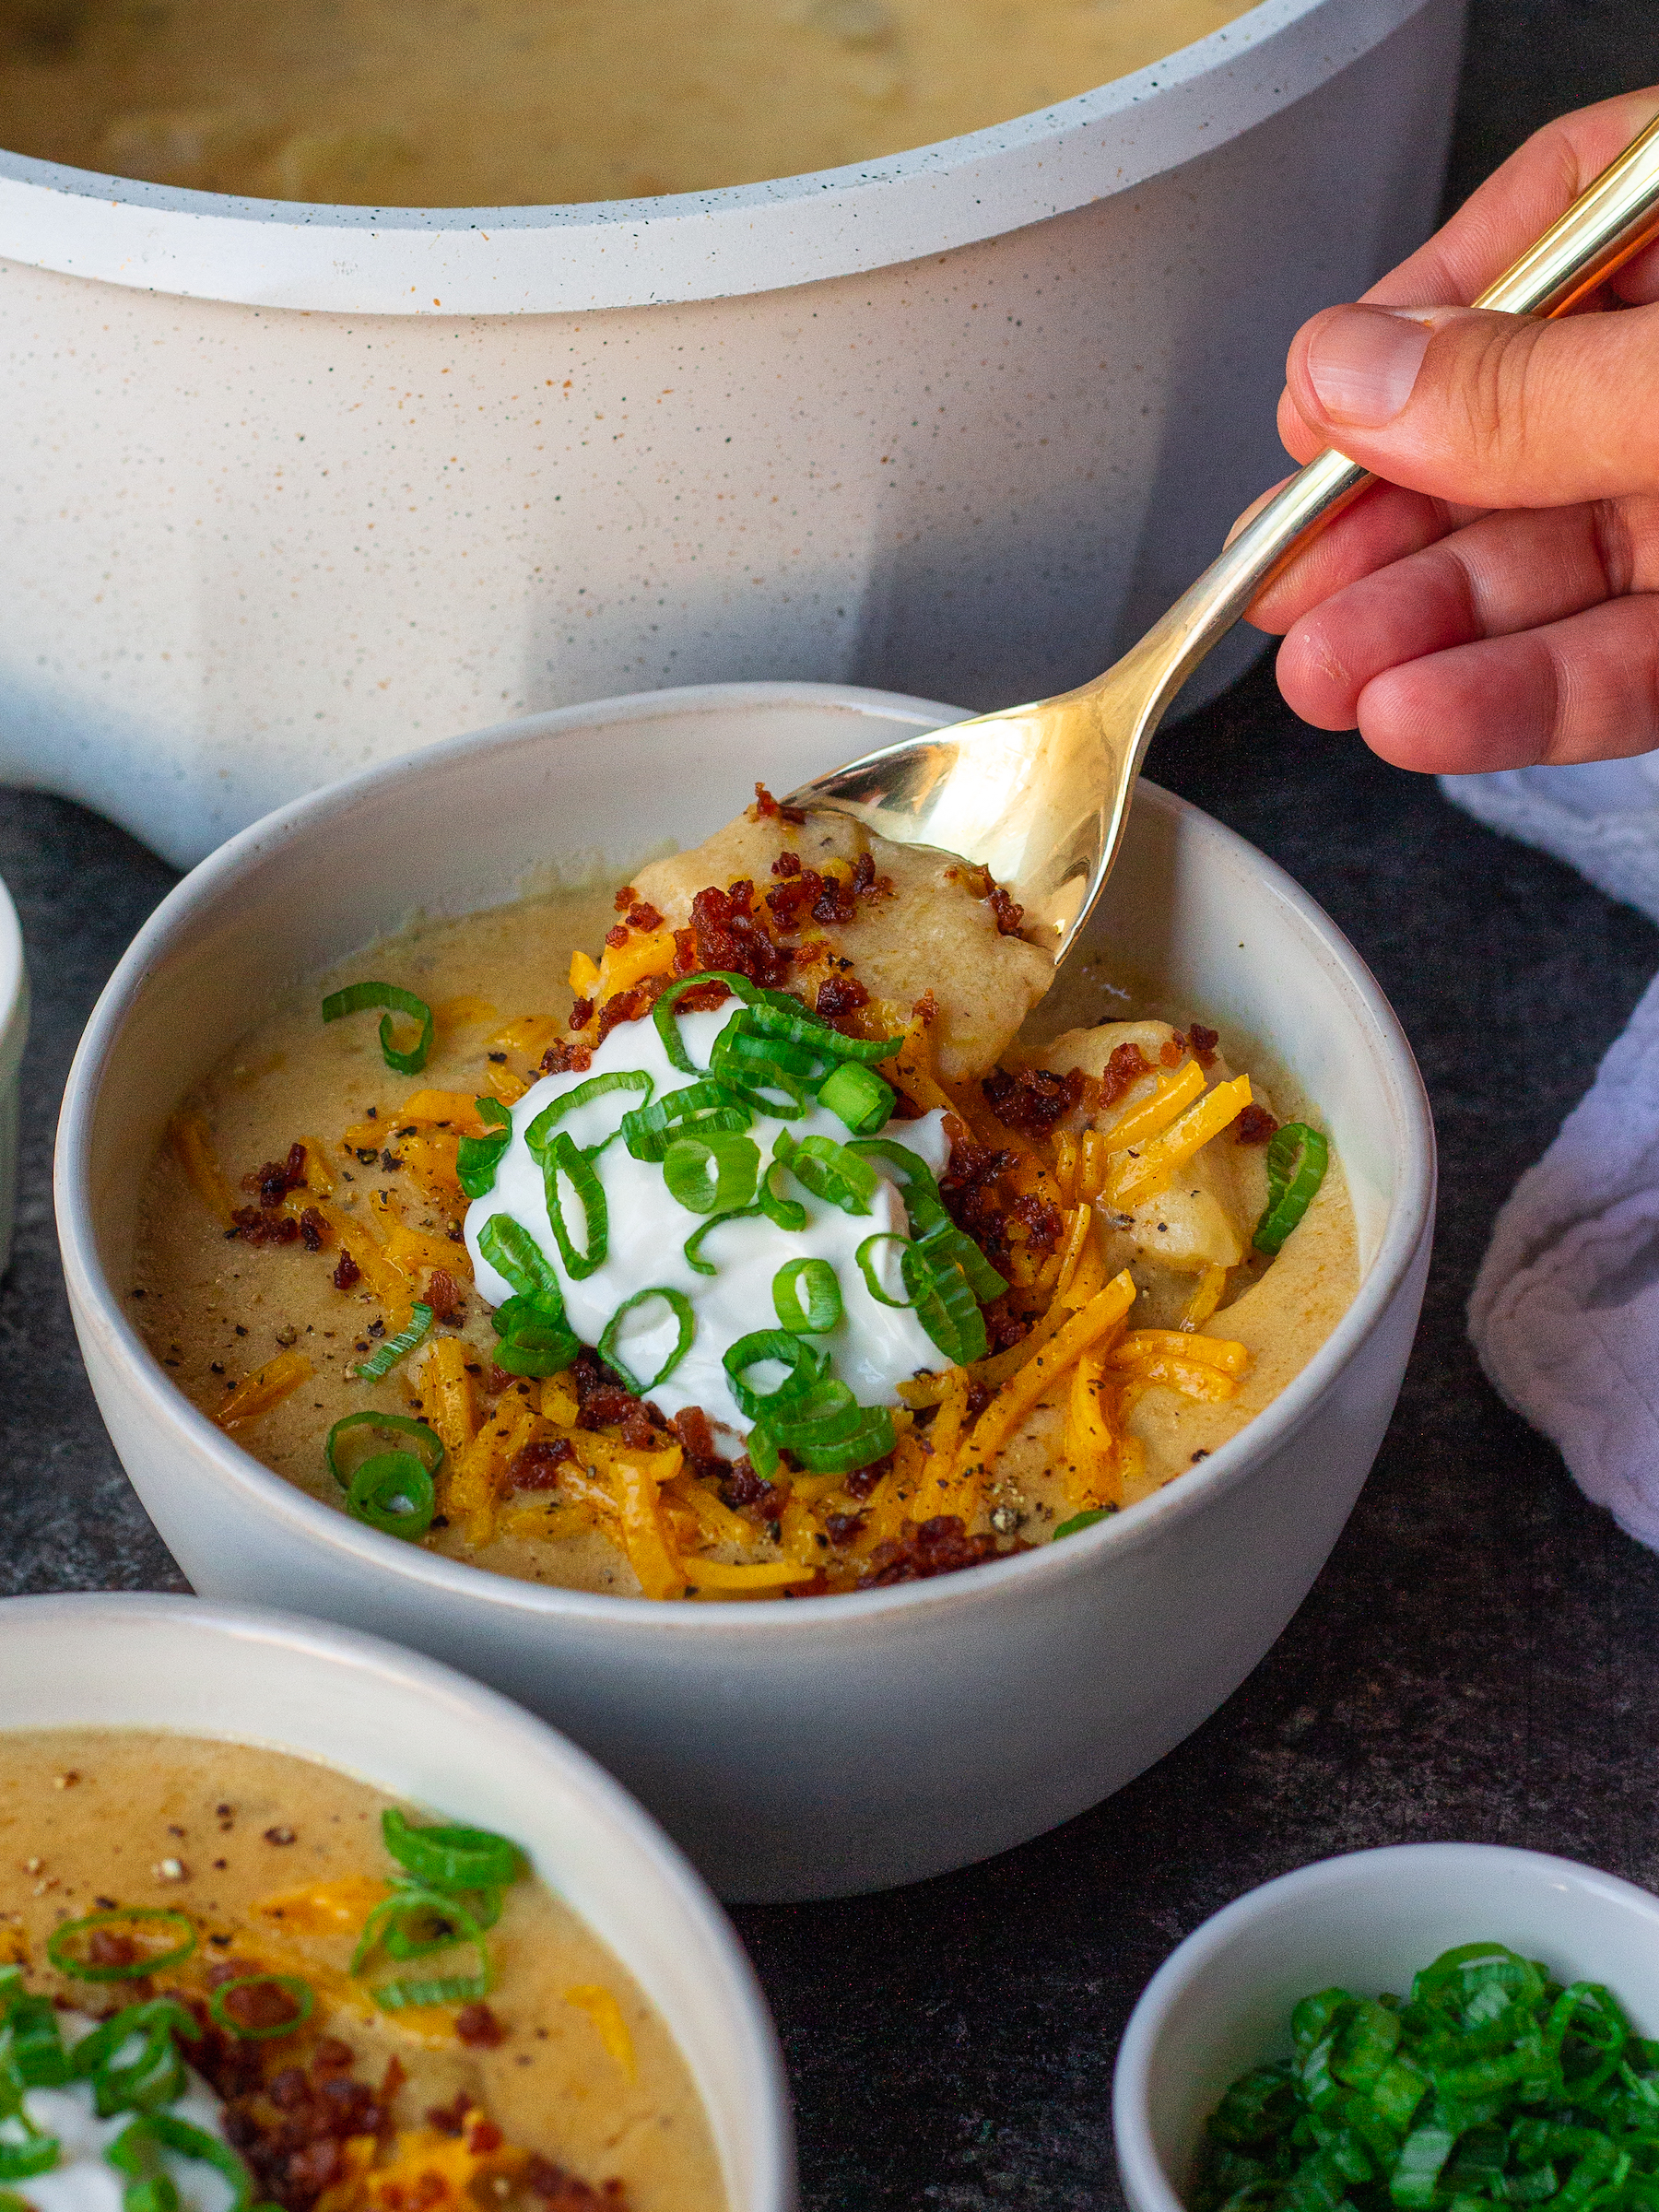 The Best Loaded Baked Potato Soup - House of Nash Eats